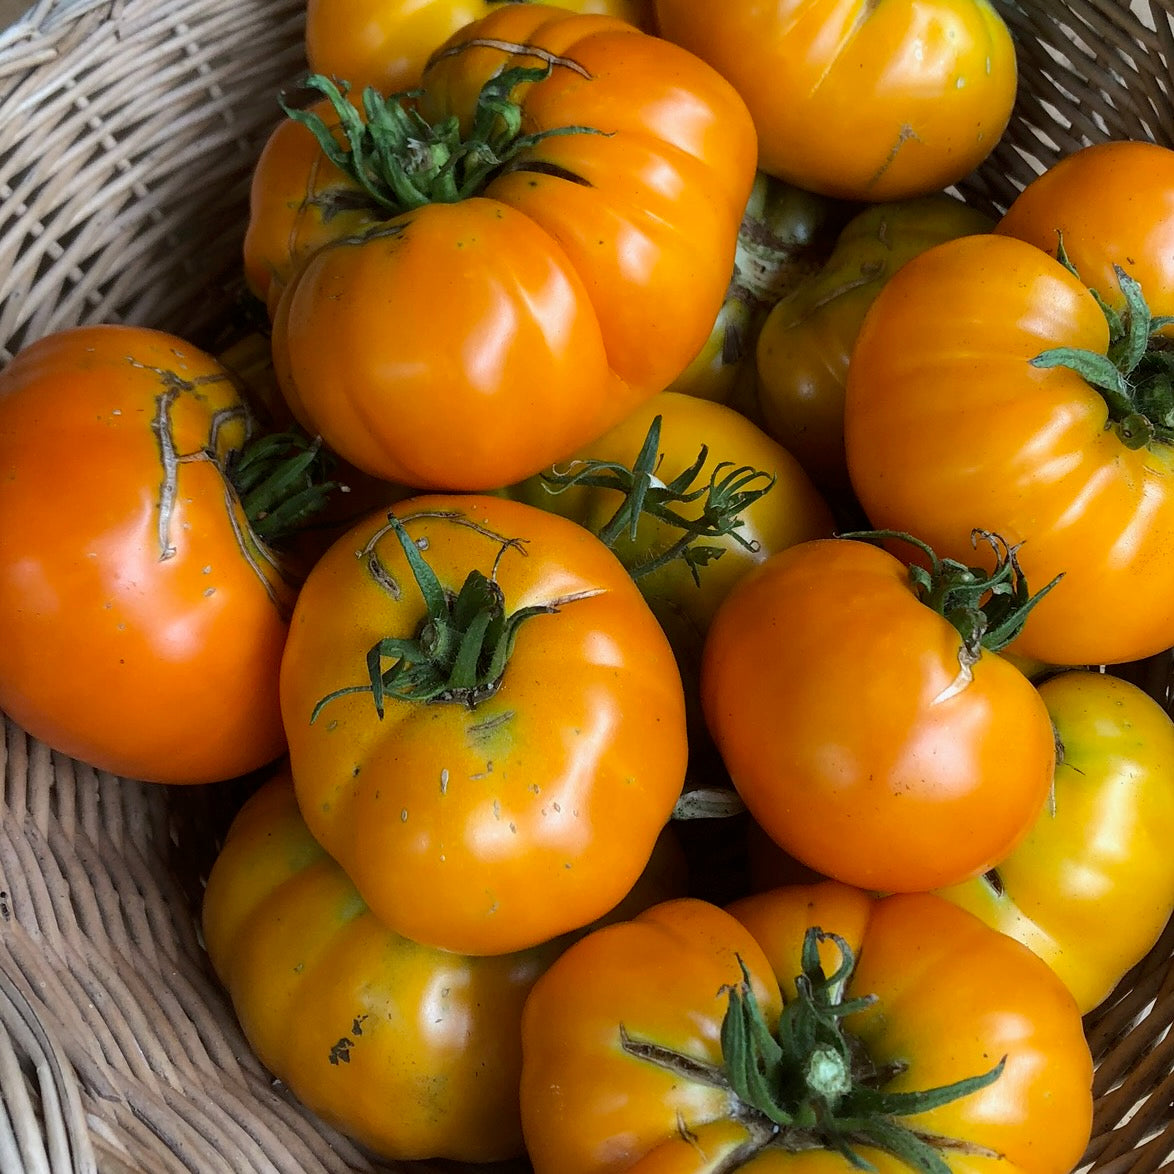 Siskiyou Orange Tomatoes in a basket